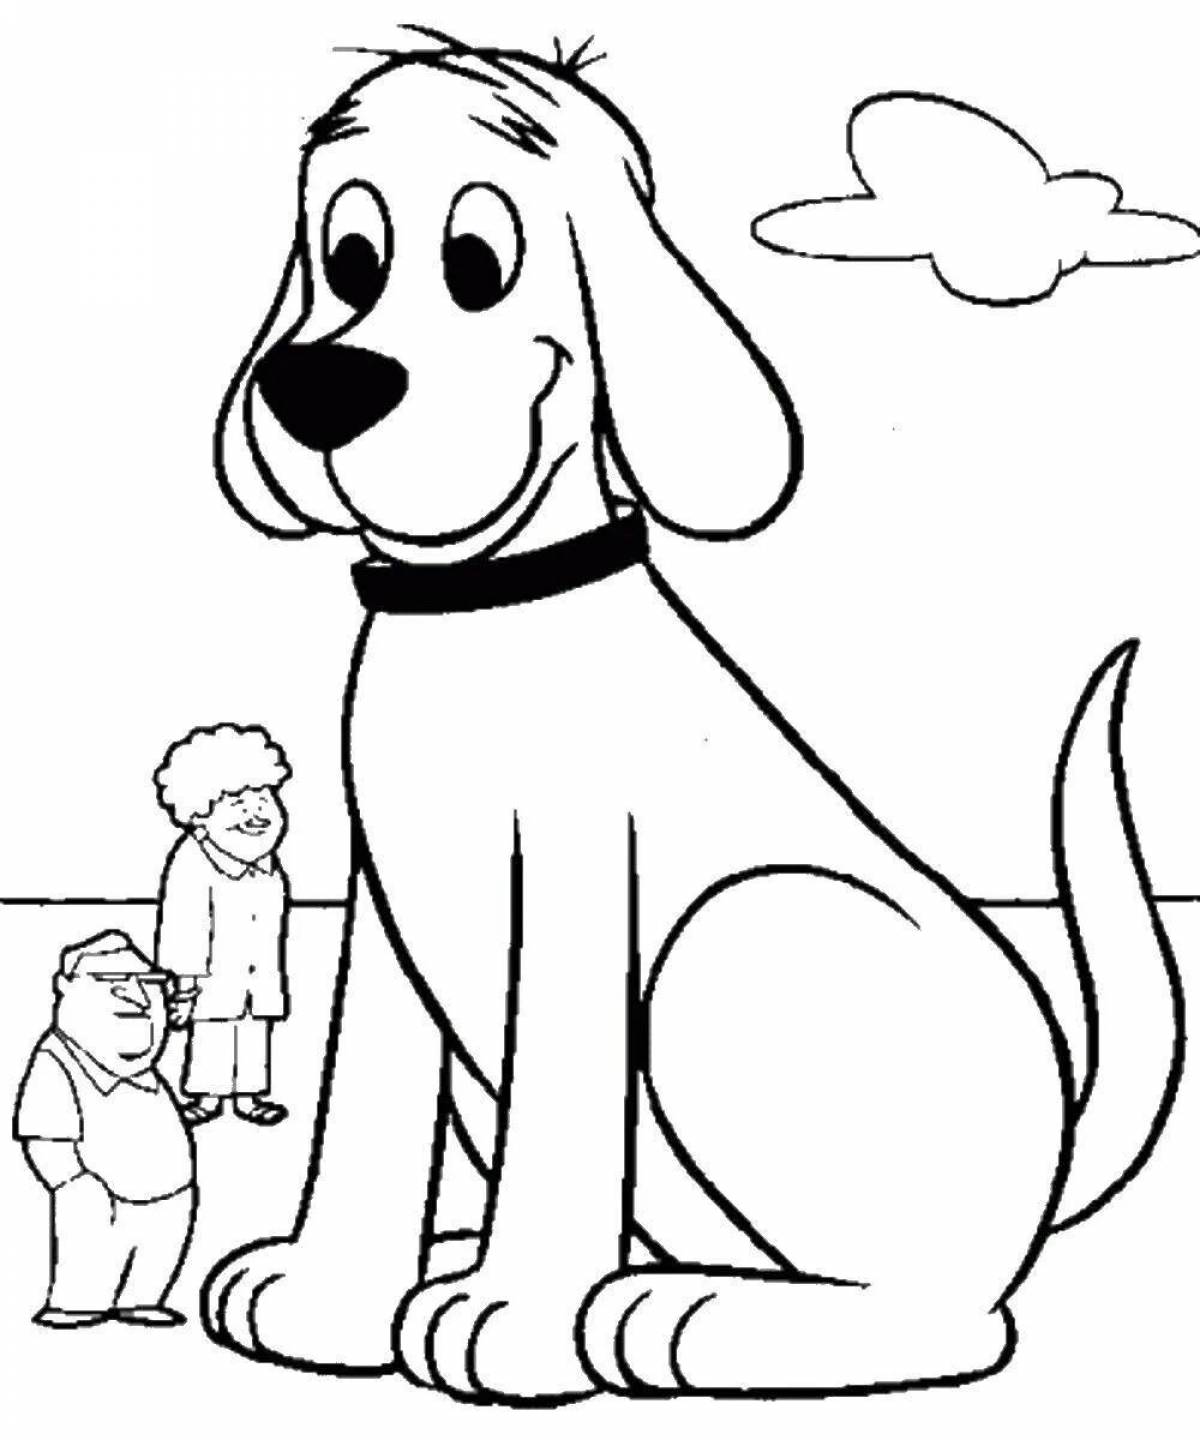 Coloring book affectionate cartoon dog